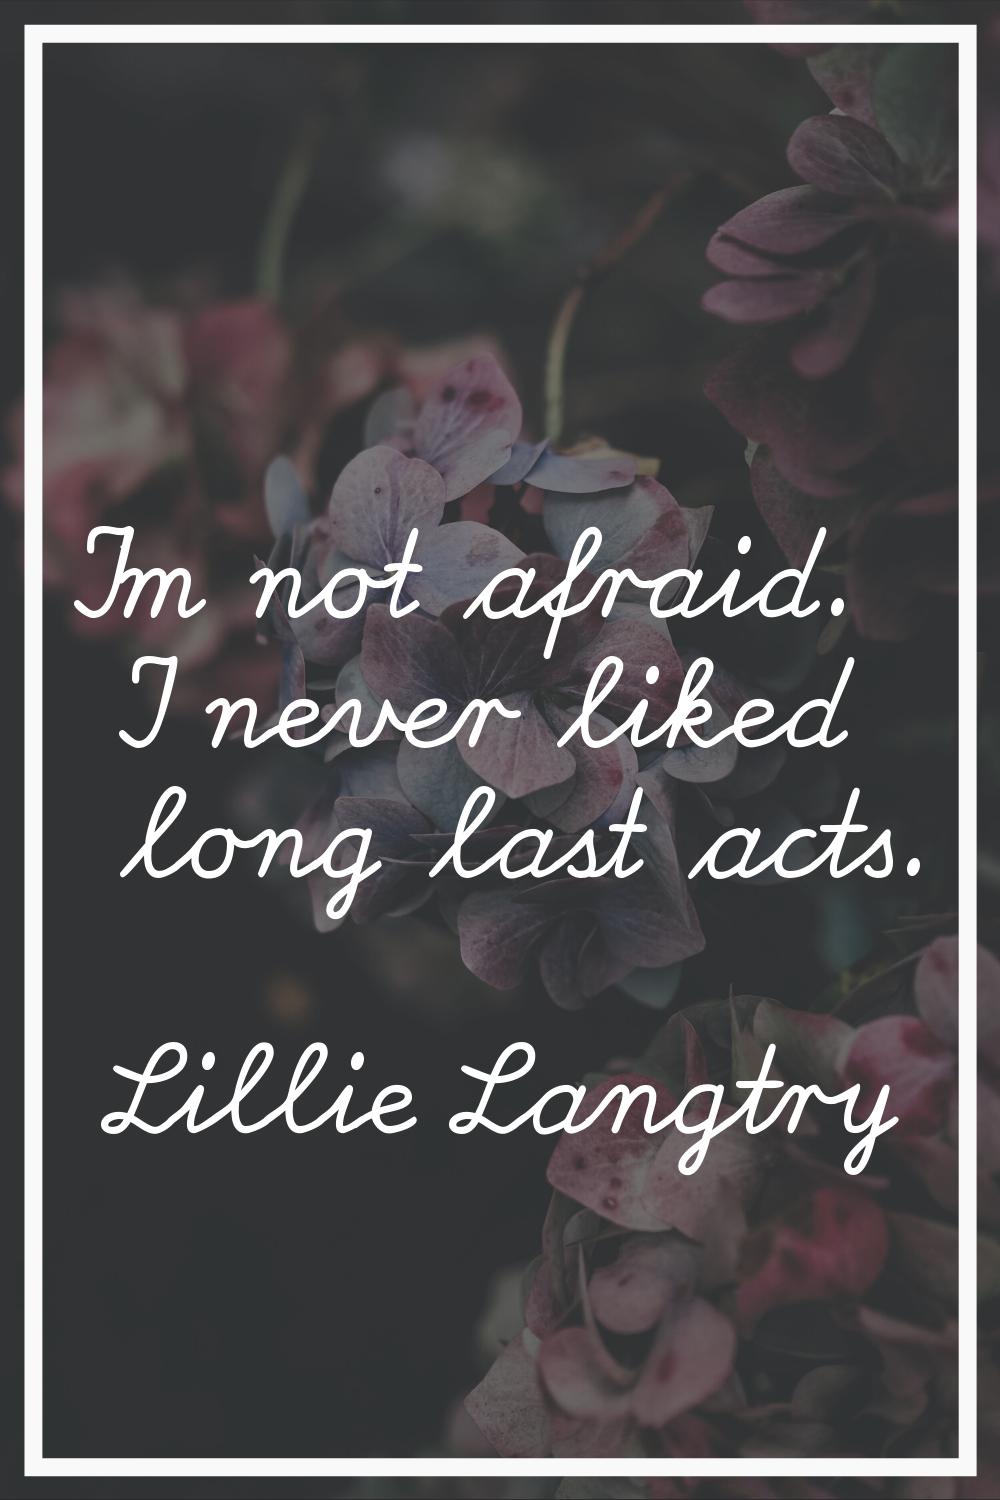 I'm not afraid. I never liked long last acts.